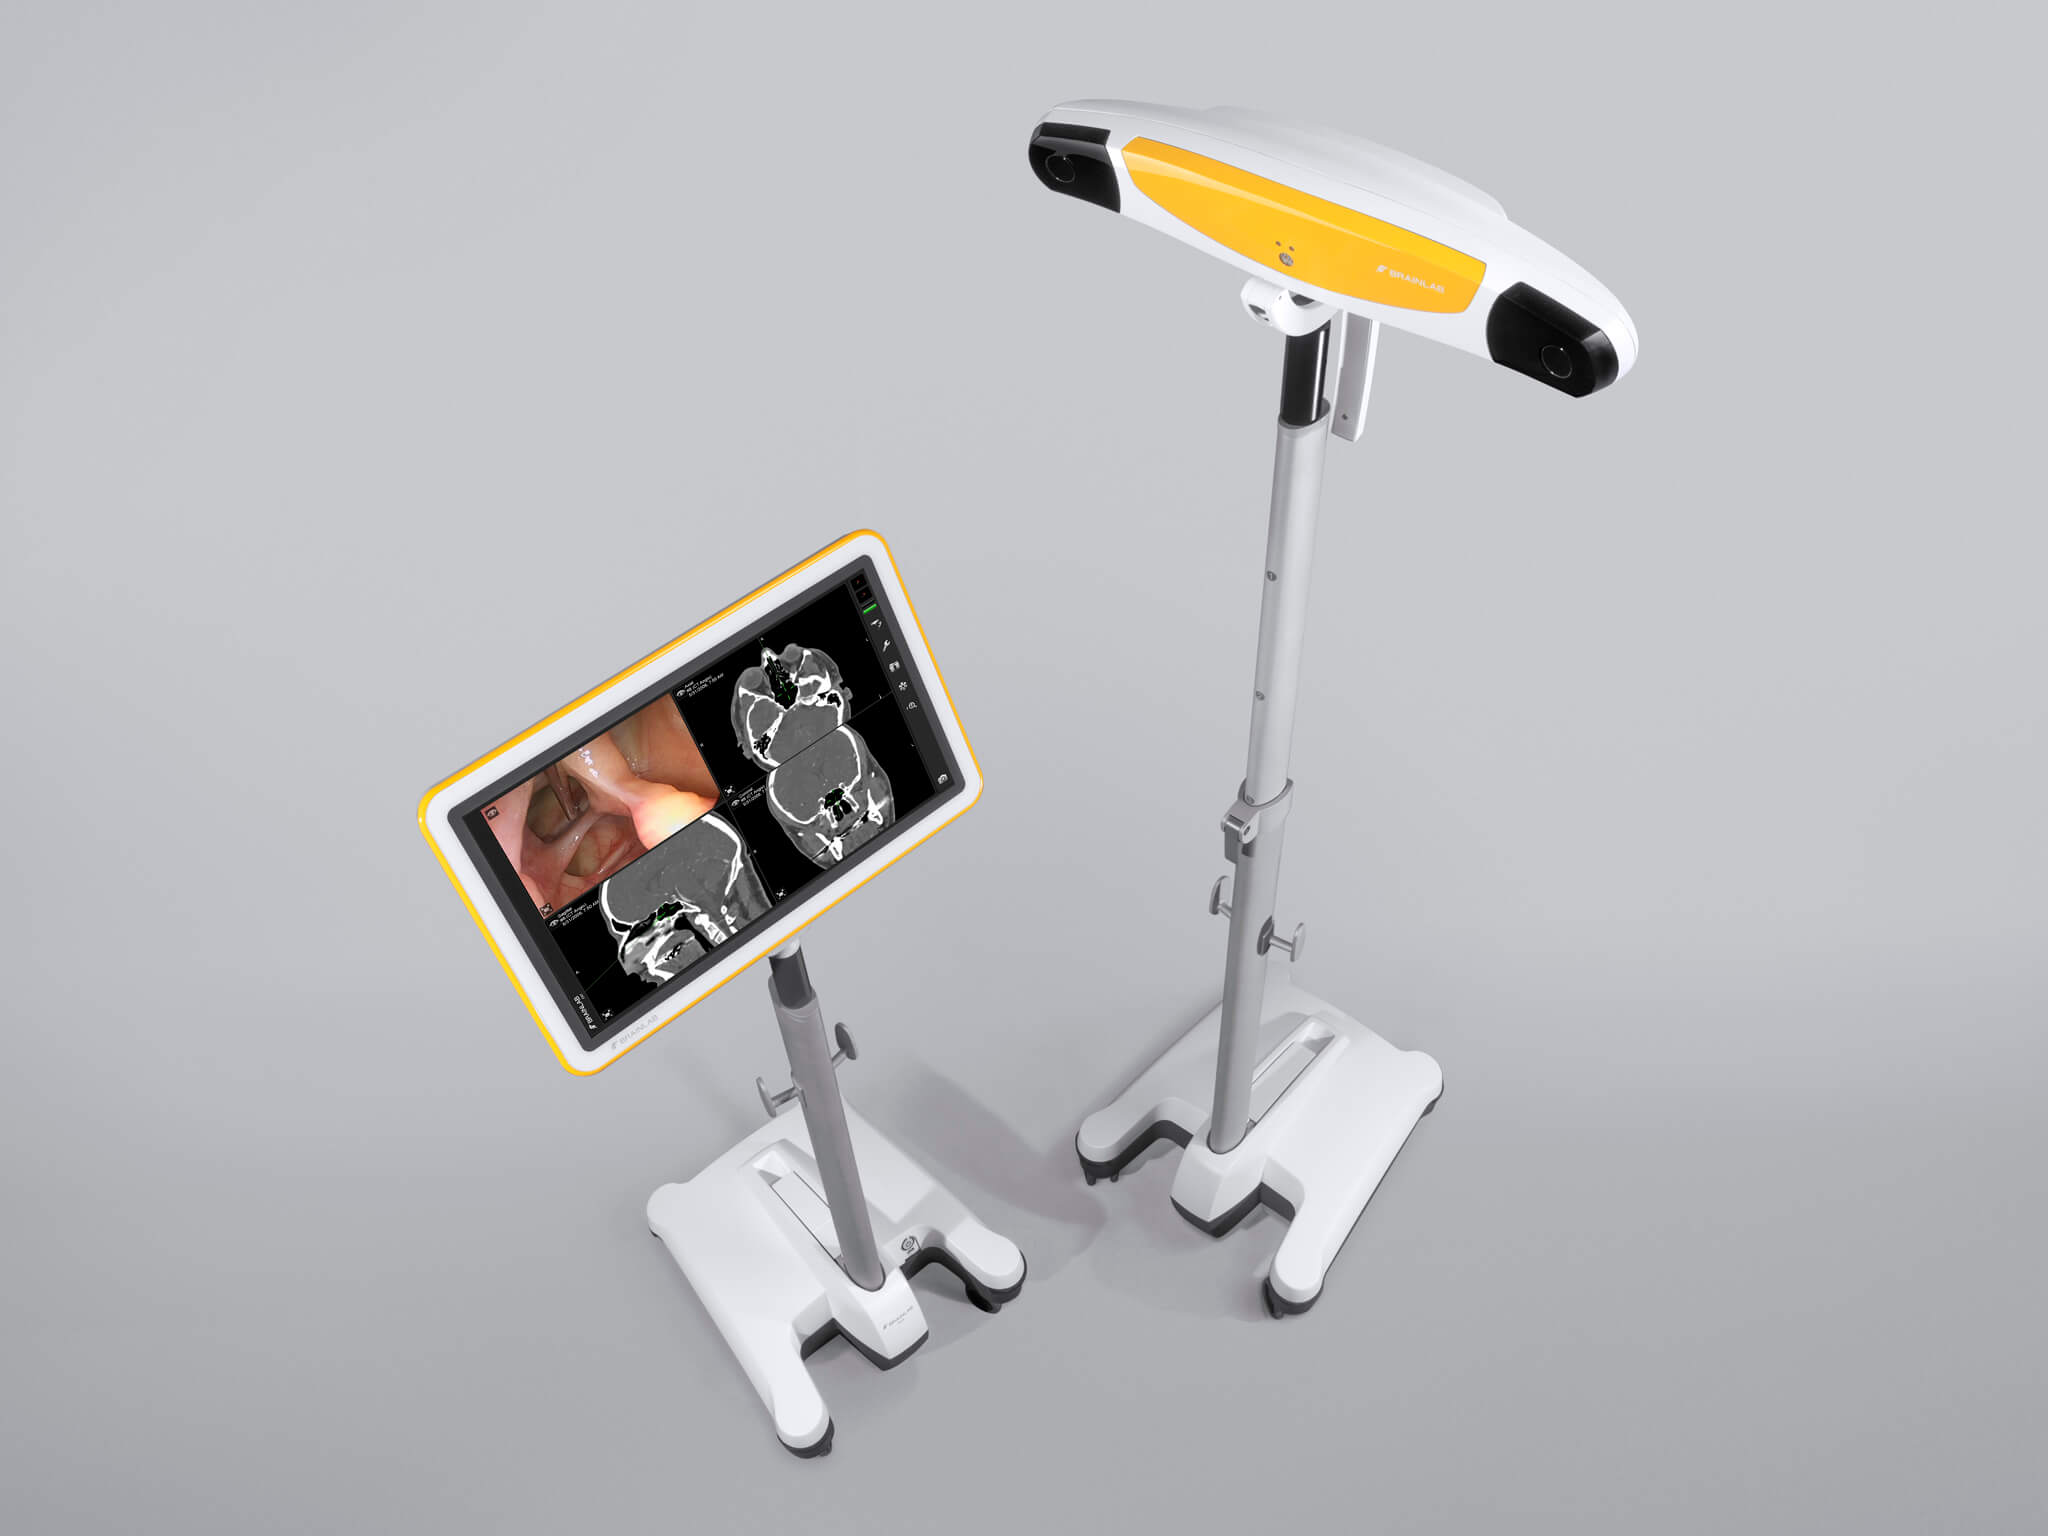 Chirurgisches Kick-Navigationssystem mit separatem Kamerastativ